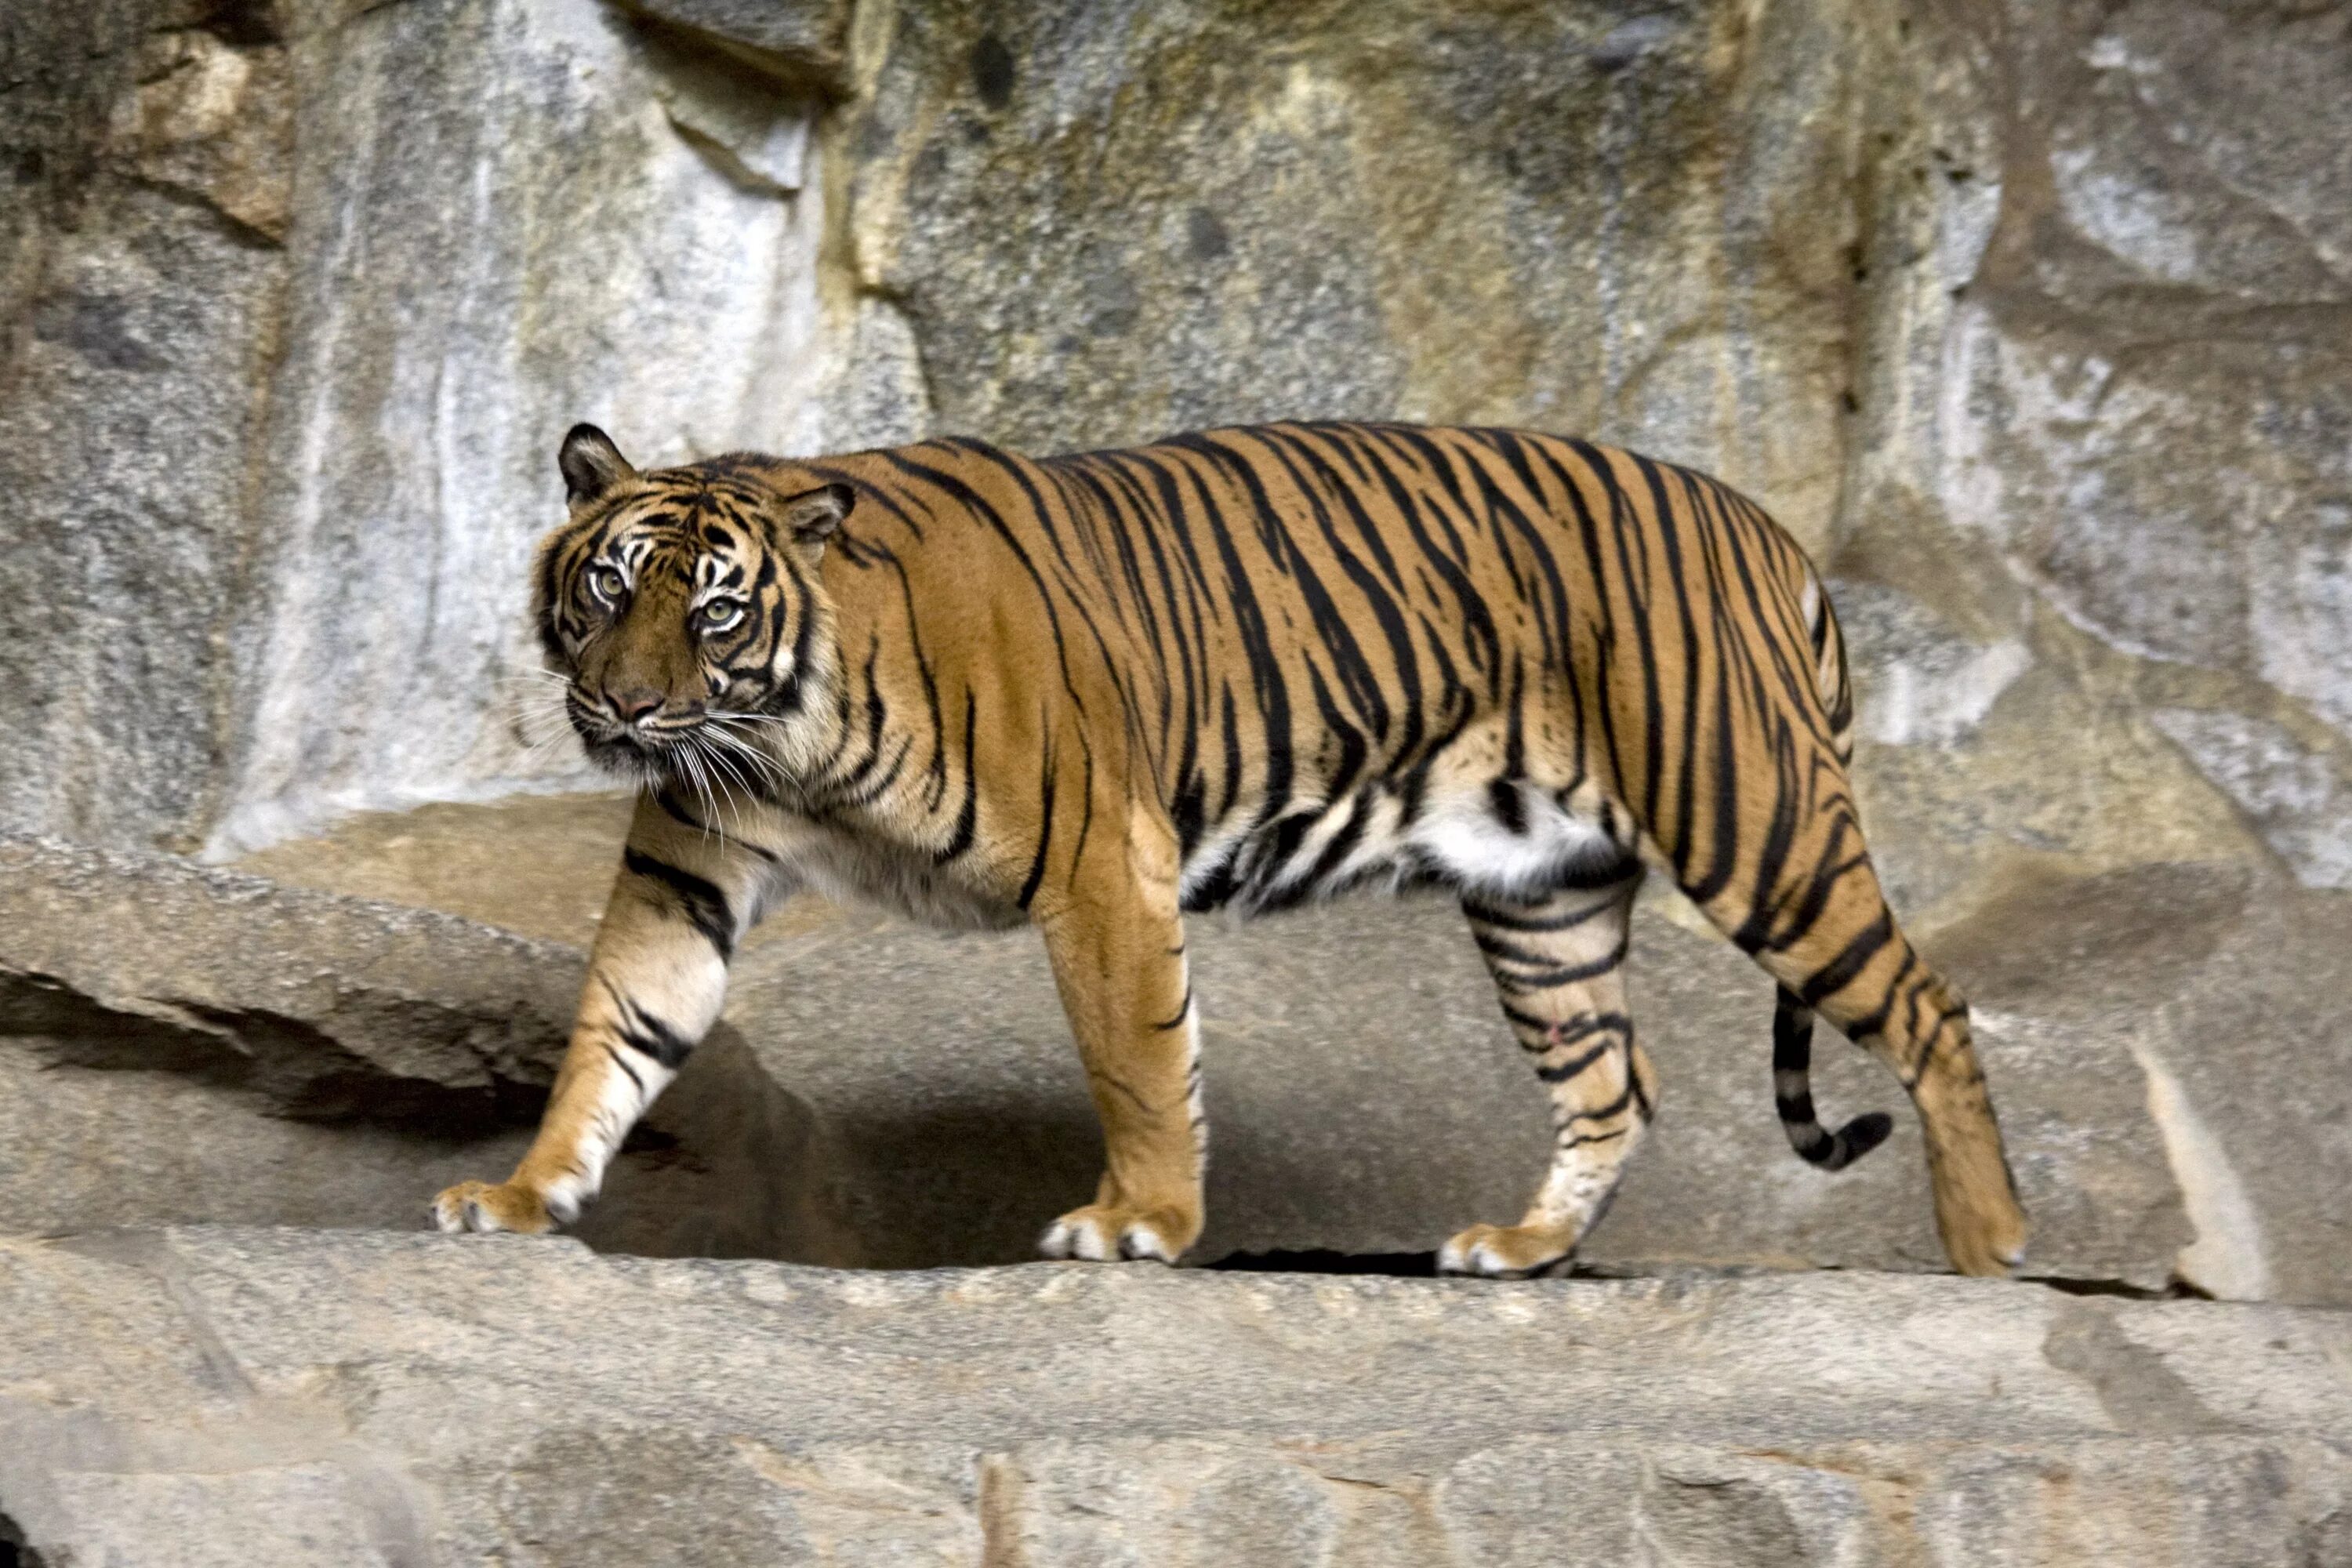 Суматранский тигр. Суматранский тигр и Амурский тигр. Индокитайский тигр. Суматранский тигр [Panthera Tigris sumatrae]. Тигровый картинка